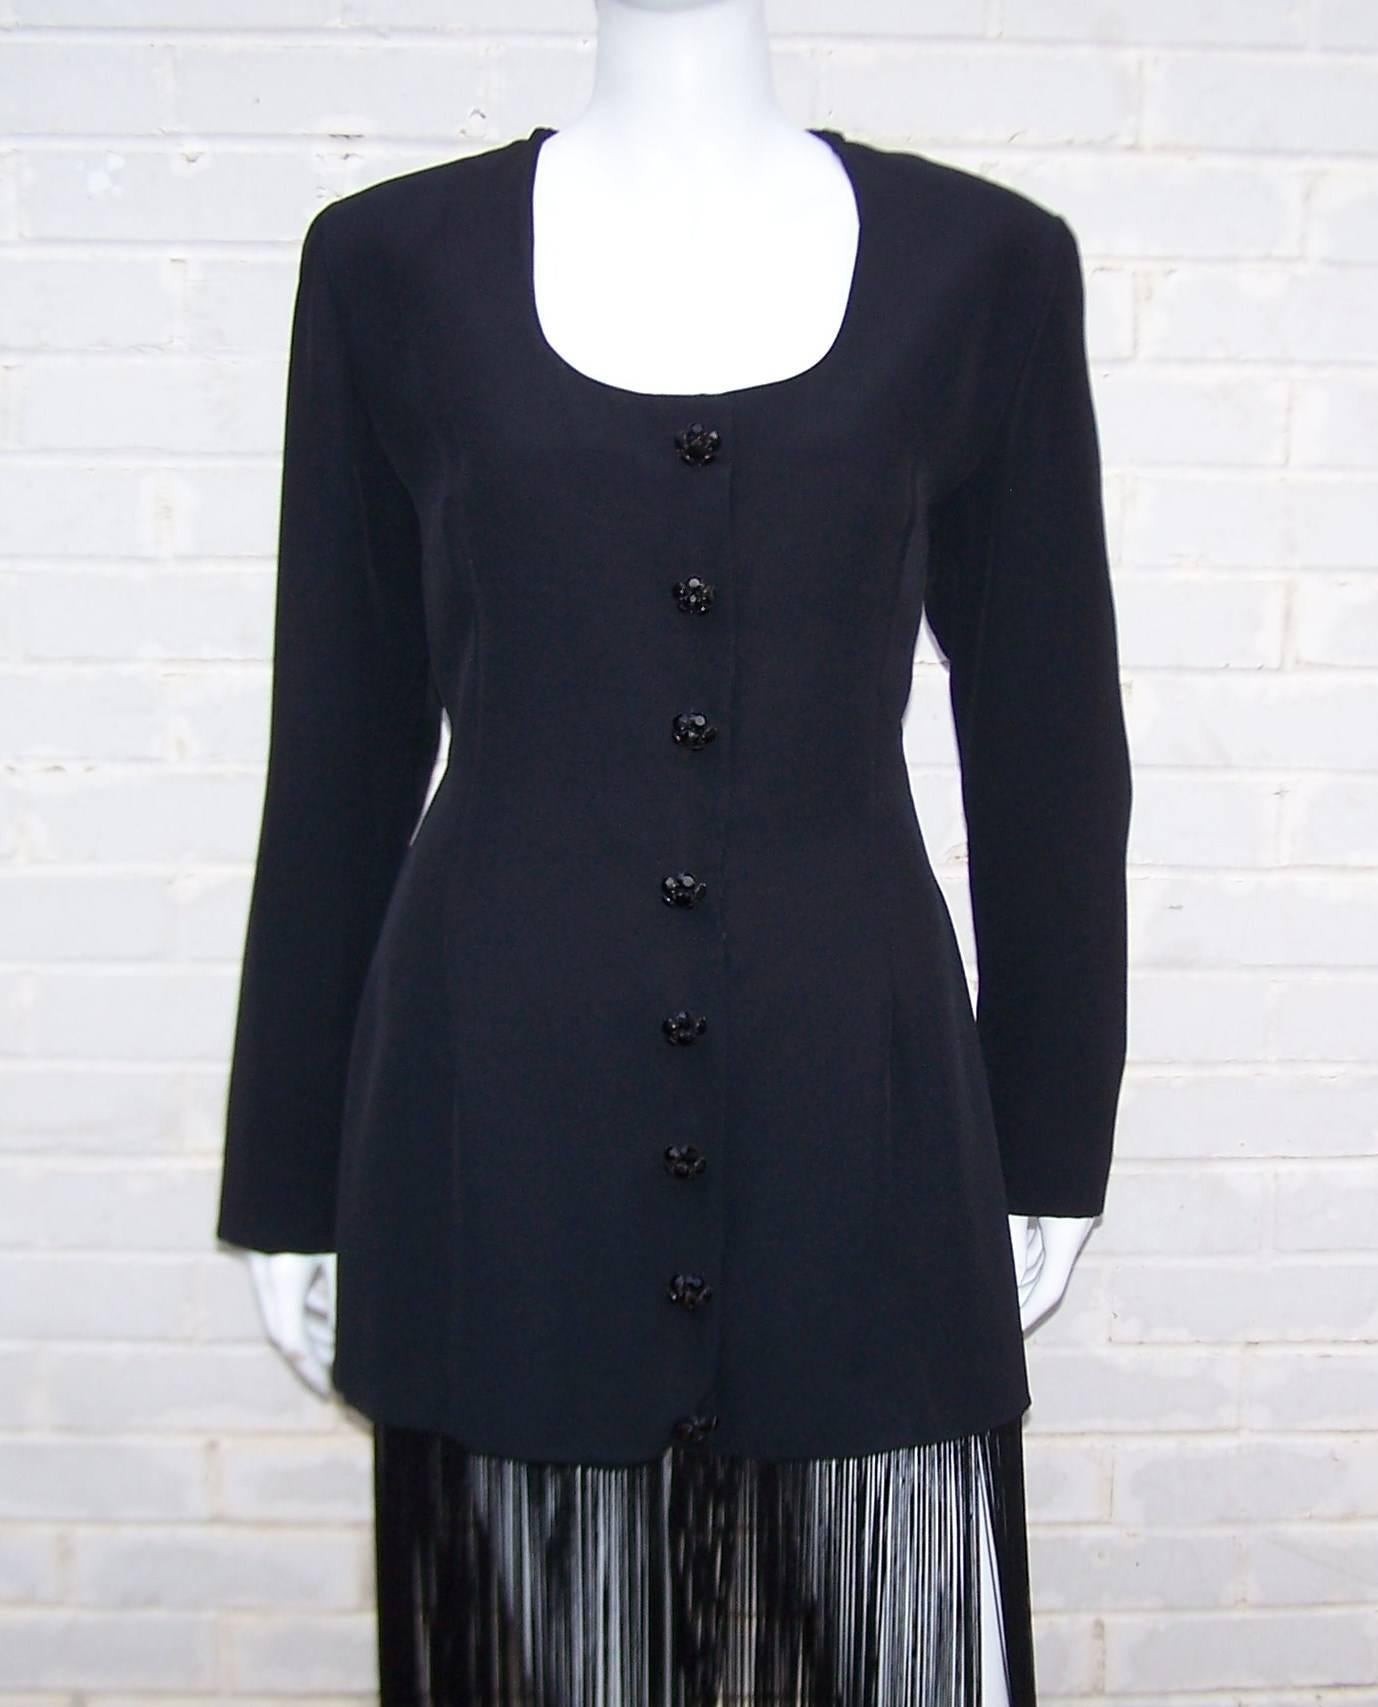 1980's Black Crepe Jacket or Dress With Fringe Benefits 1